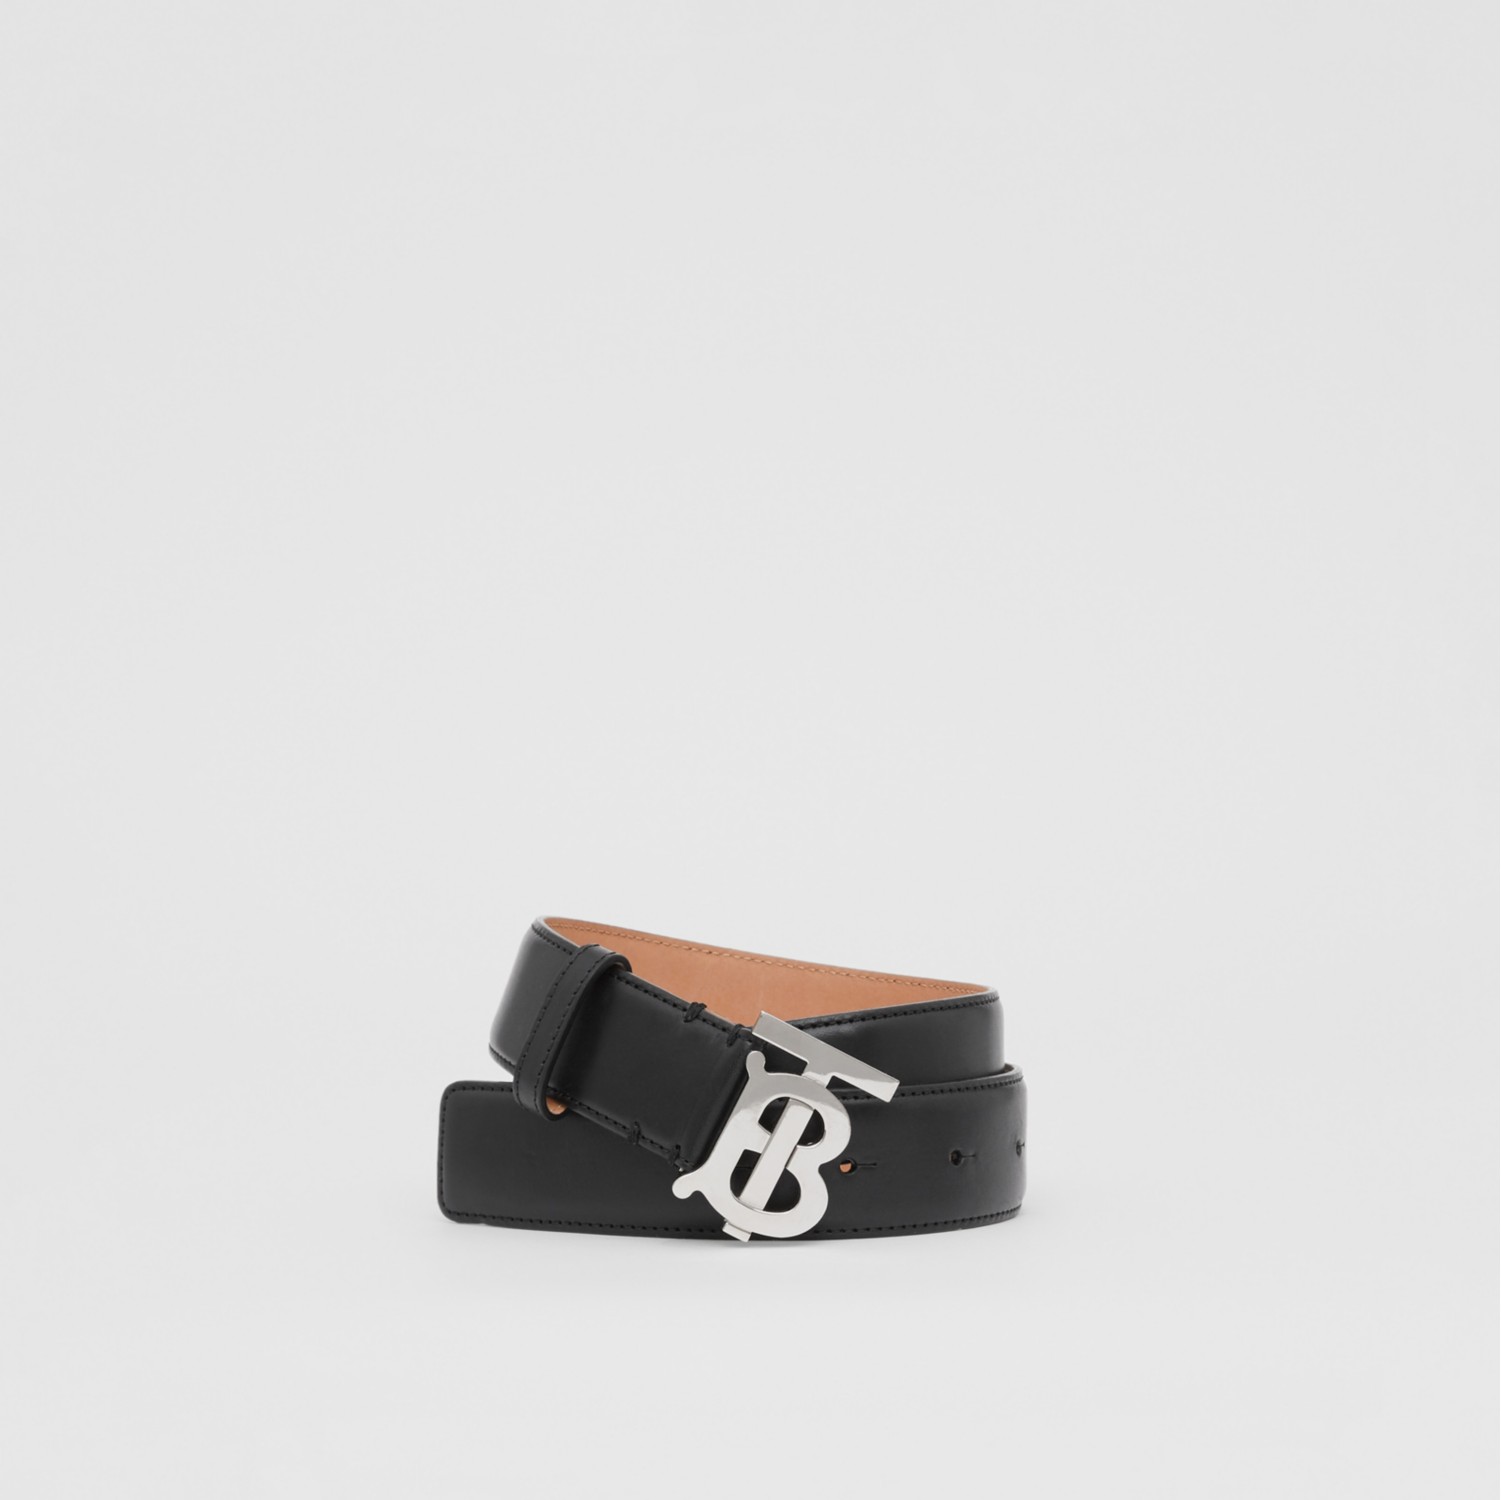 Burberry Monogram Detail Buckled Belt - Black